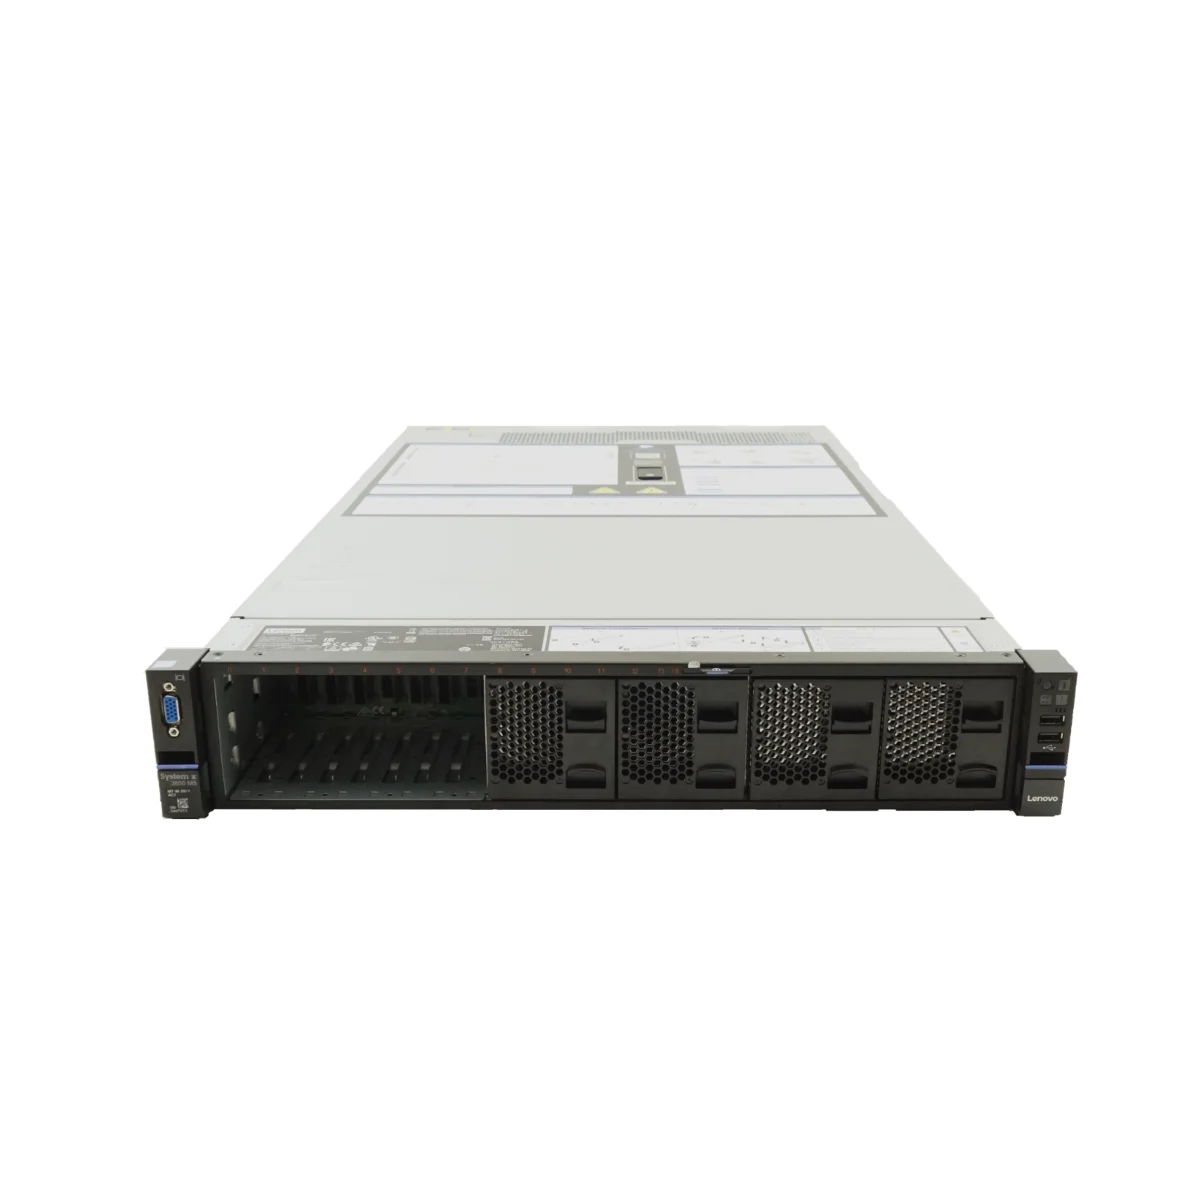 Lenovo System X3650 M5 2U Rack Server